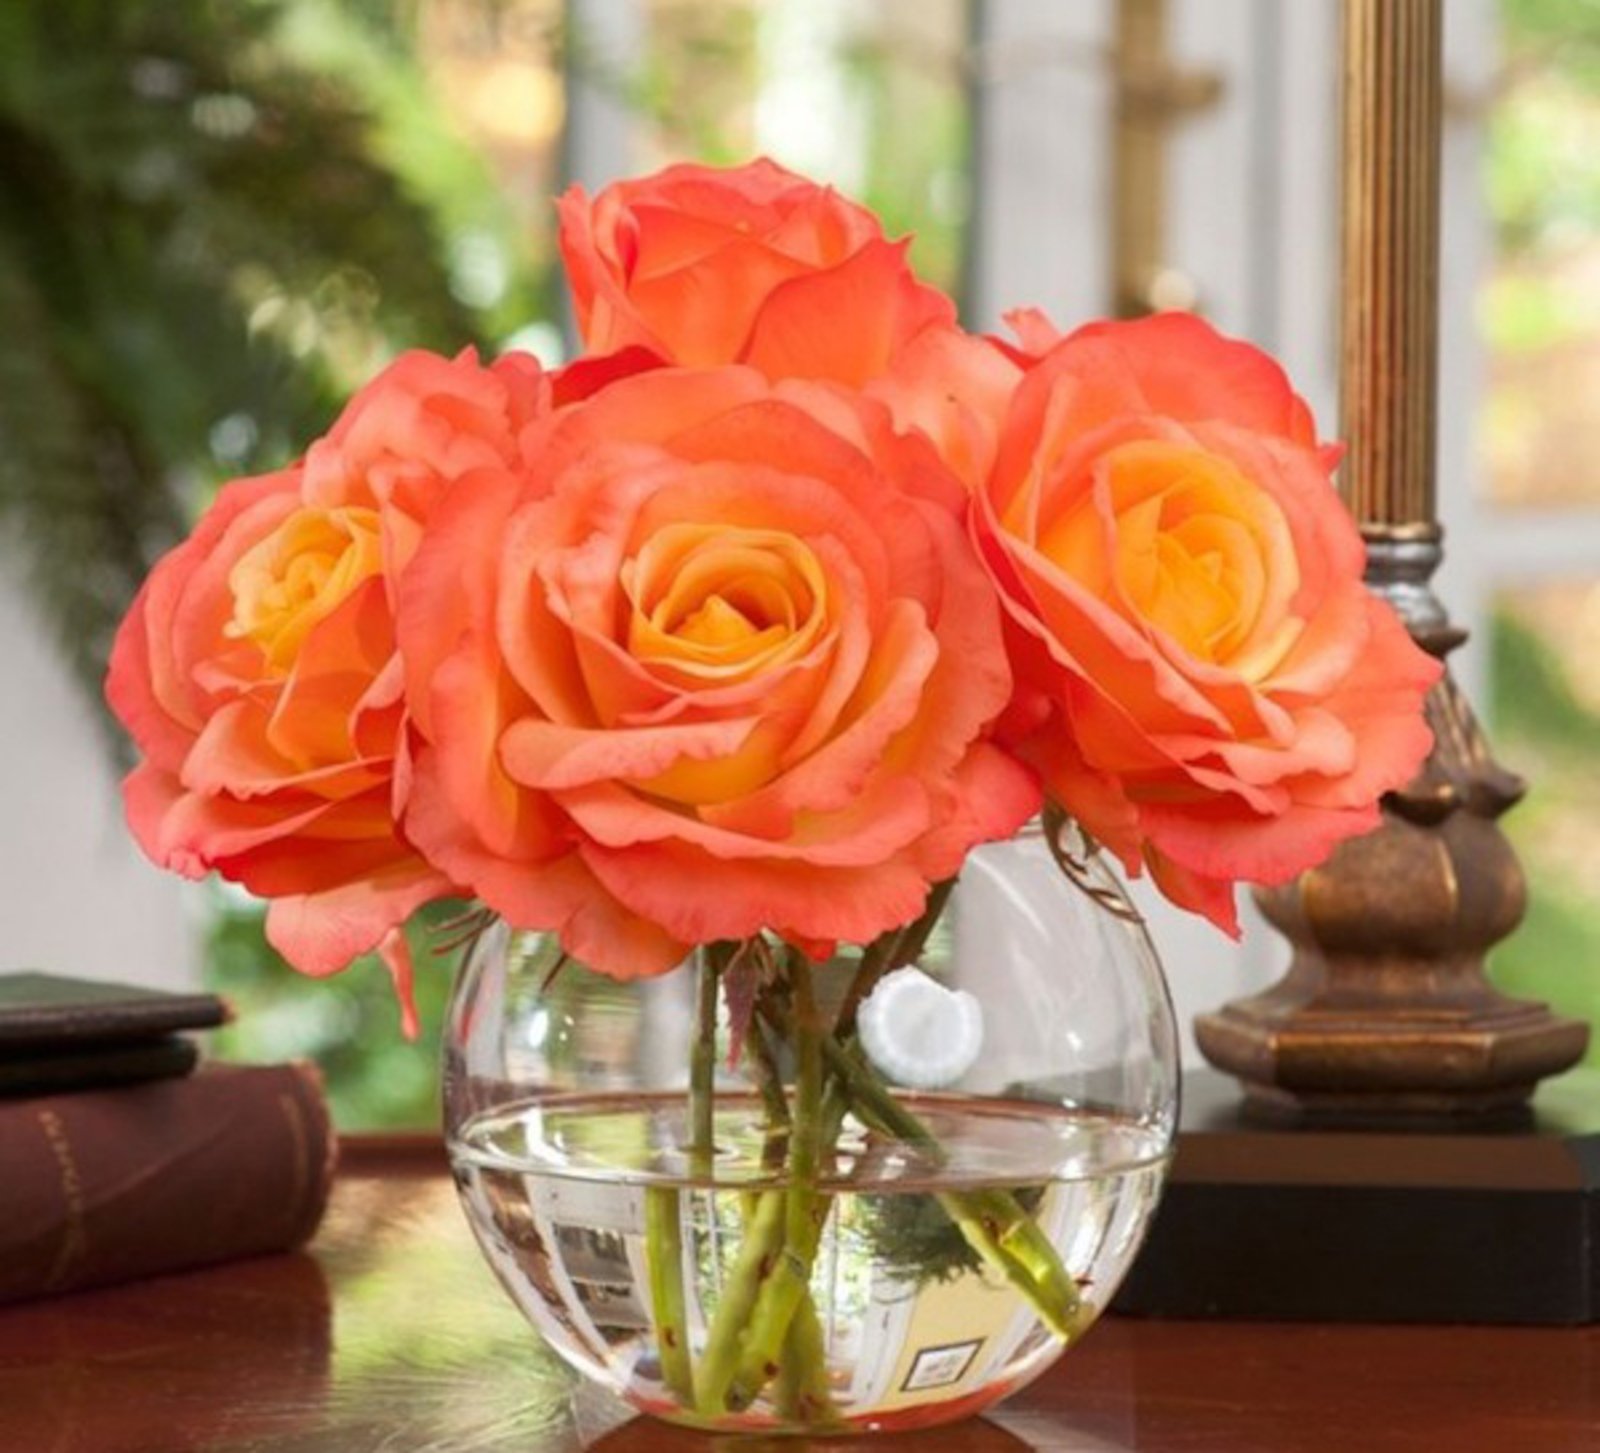 Оранжевые розы в вазе. Ранункулюс оранж. Бугенвиллия оранж Глоу. Цветы в вазе. Розы в вазе.